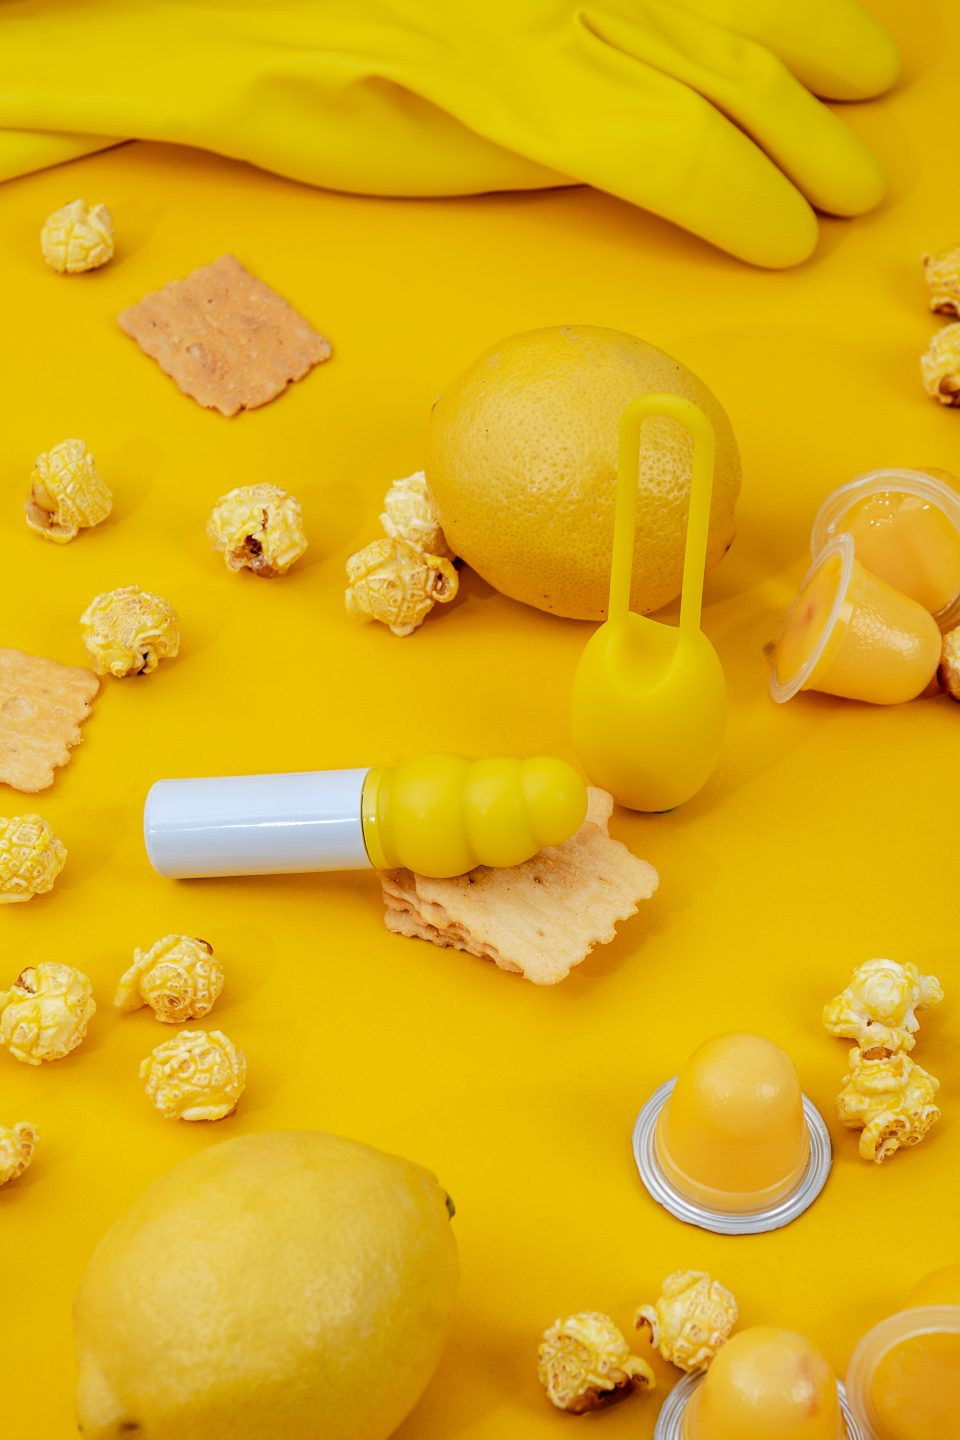 yellow vibrator, lemon and pop corns